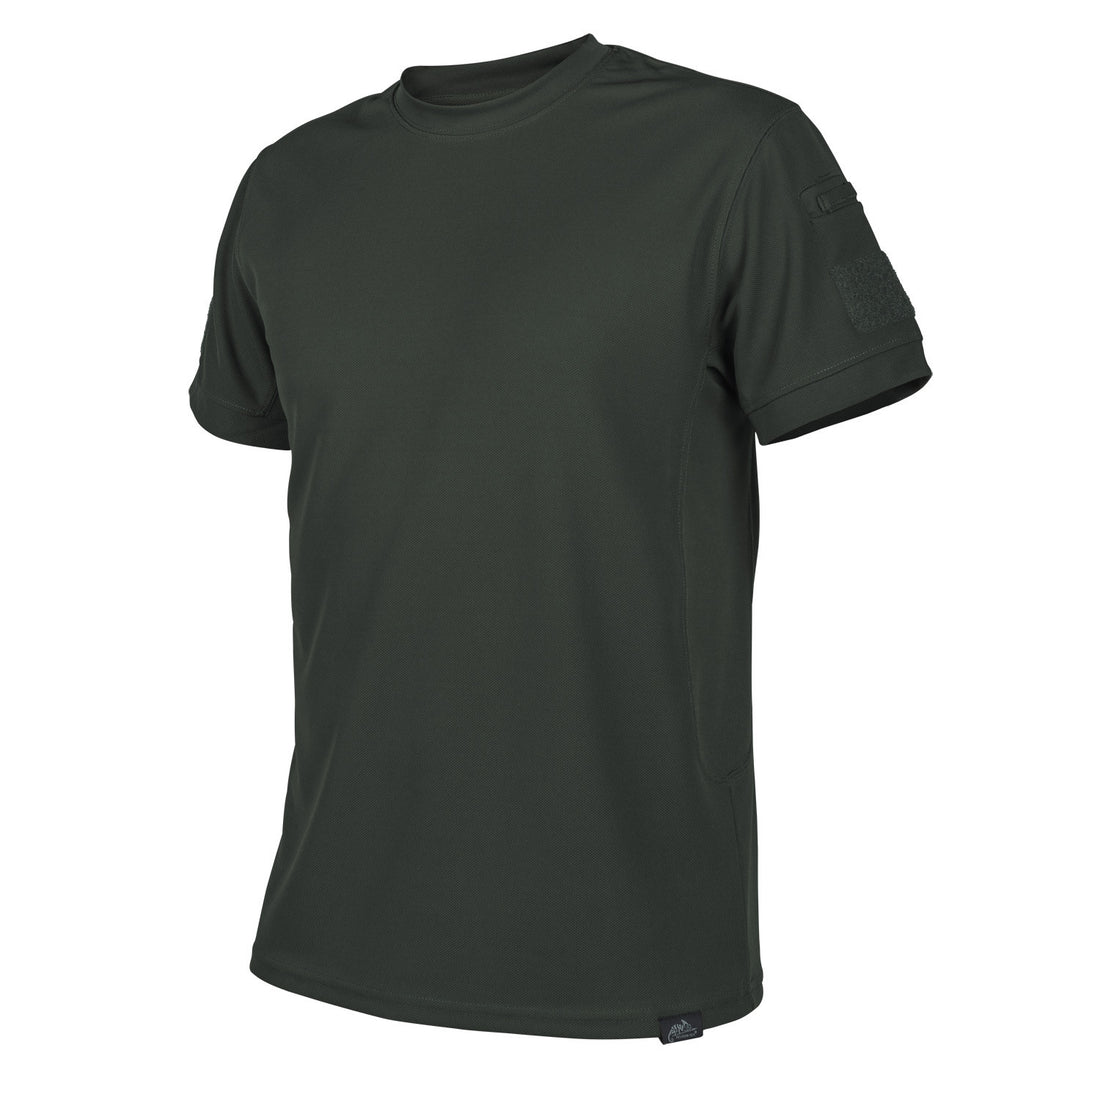 TACTICAL T-Shirt - TopCool NEW - Target KSA - متجر هدف